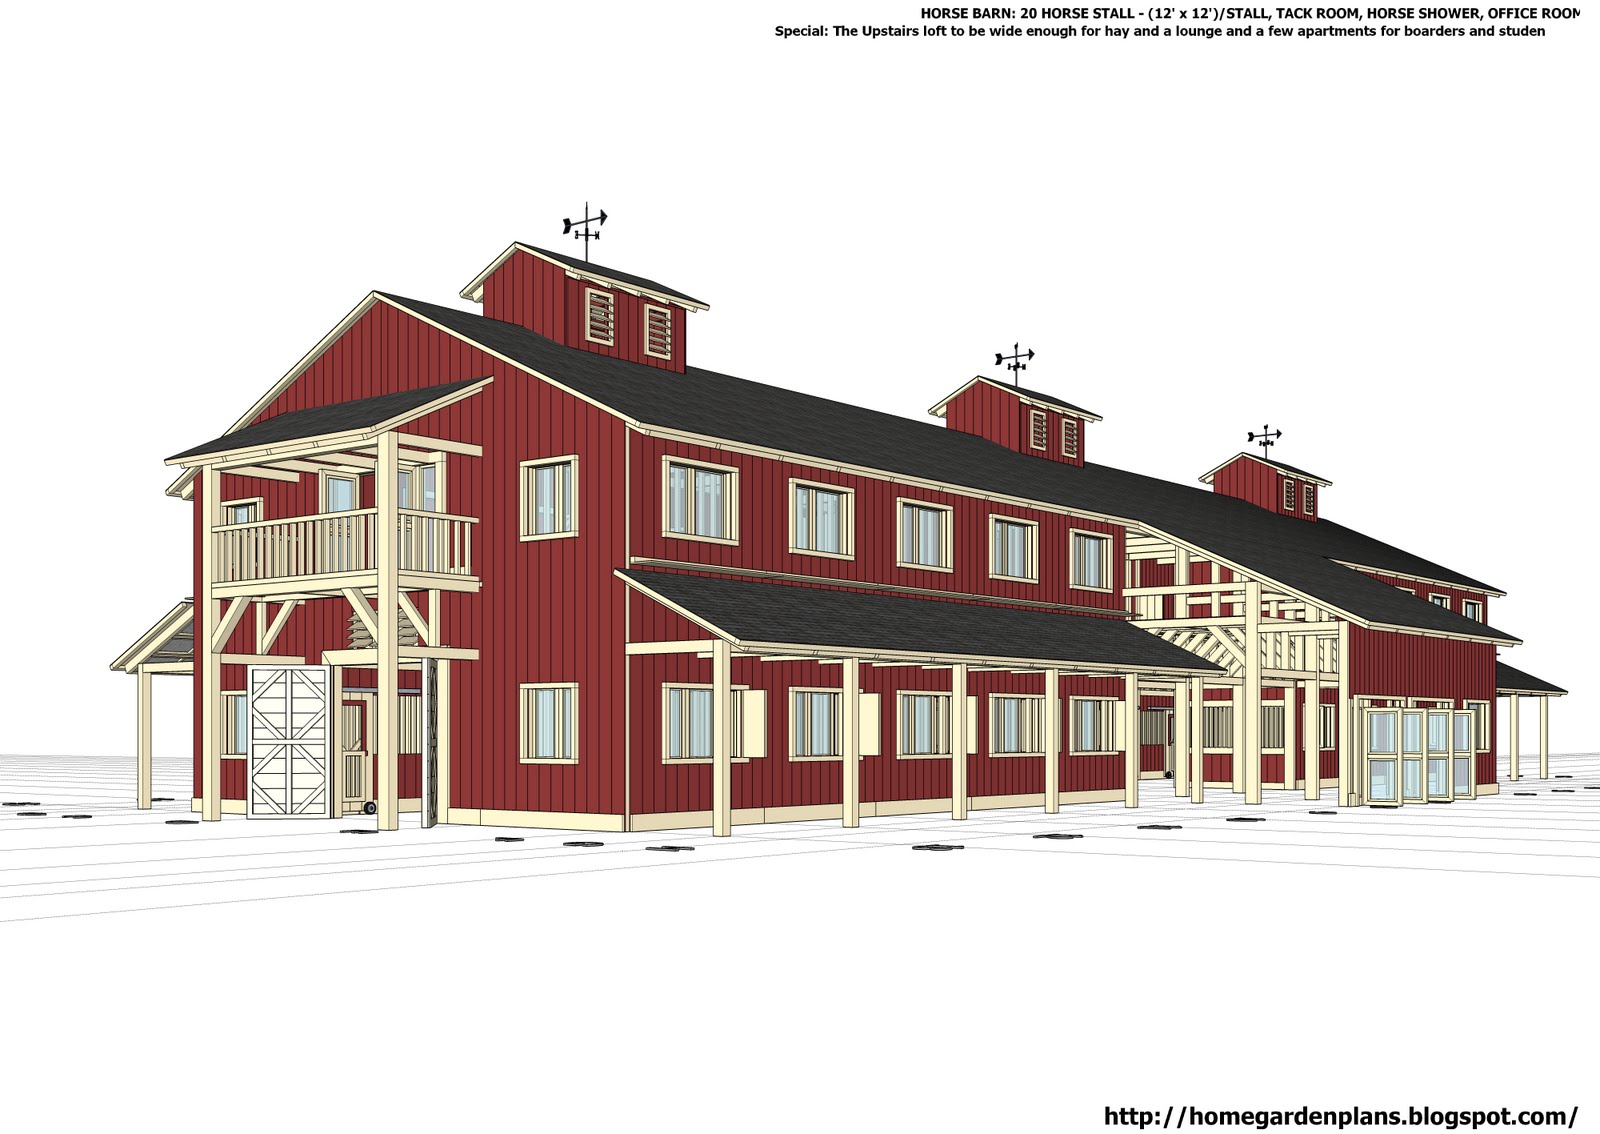 horse stall barn plans download tall barn shed usa custom sheds custom ...